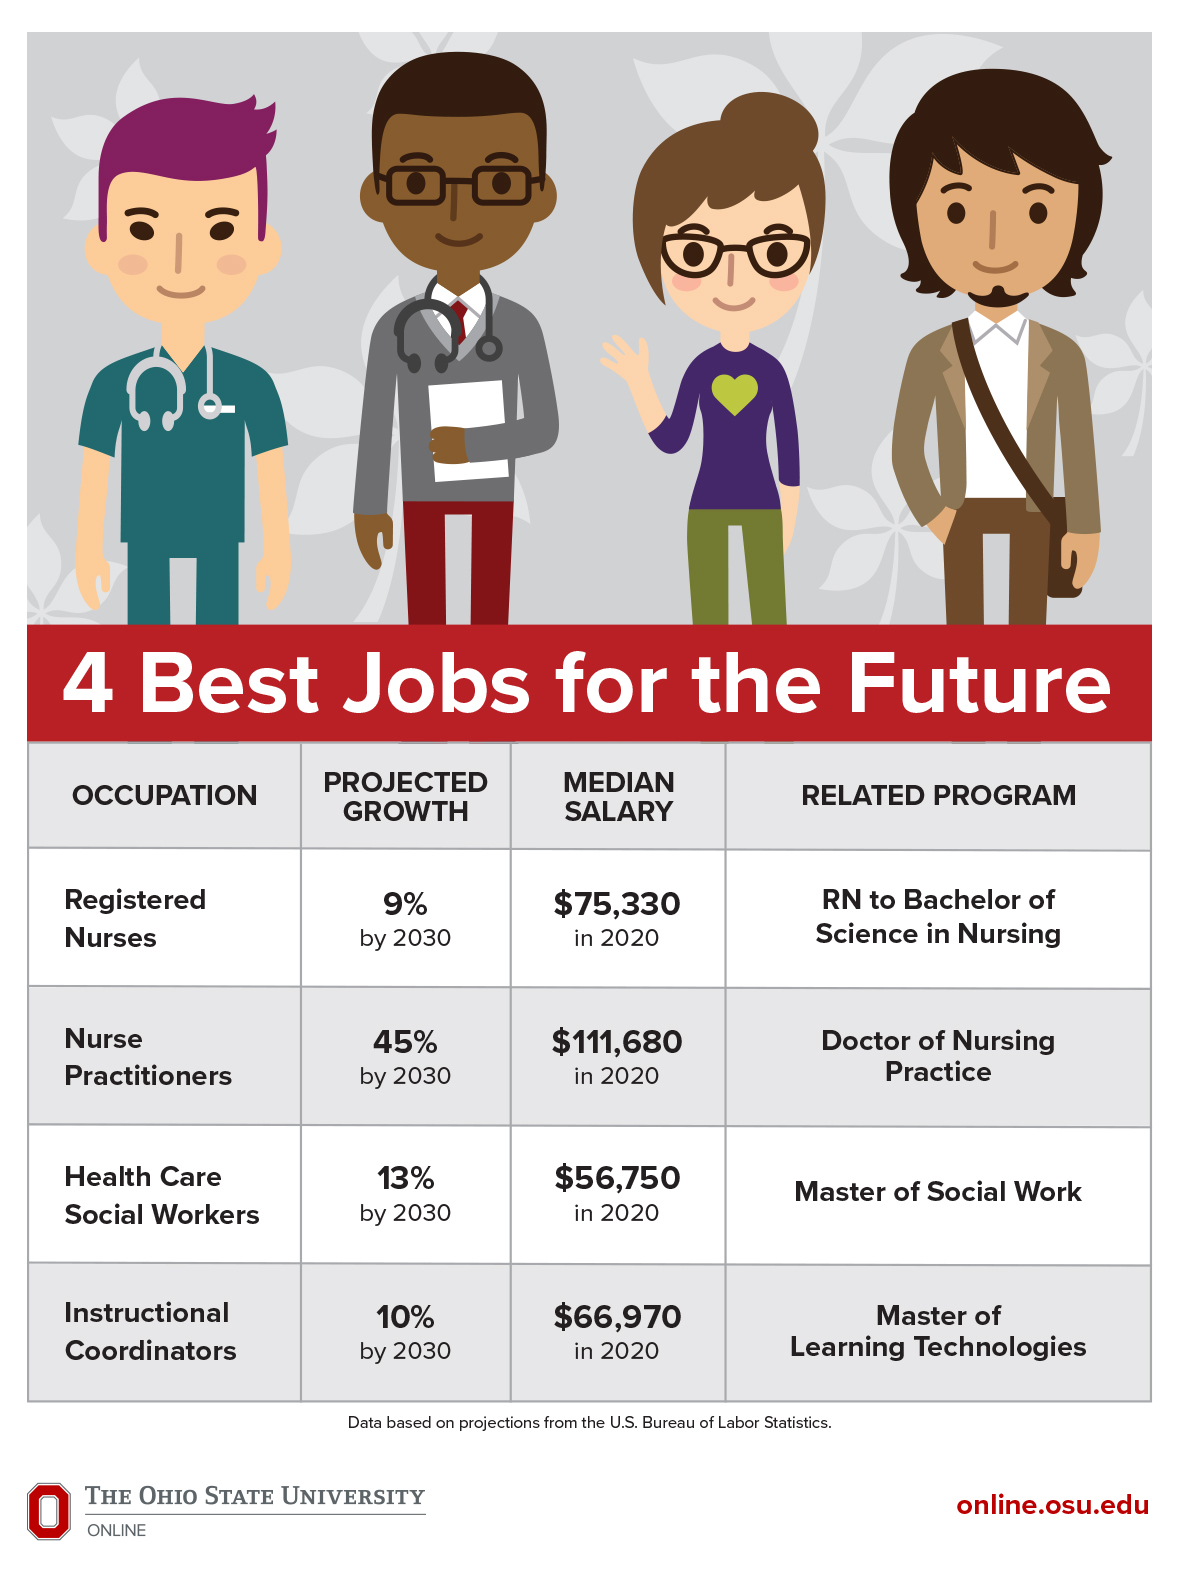 4 Best Jobs for the Future: Registered Nurse, Nurse Practitioner, Health Care Social Worker, Instructional Coordinator